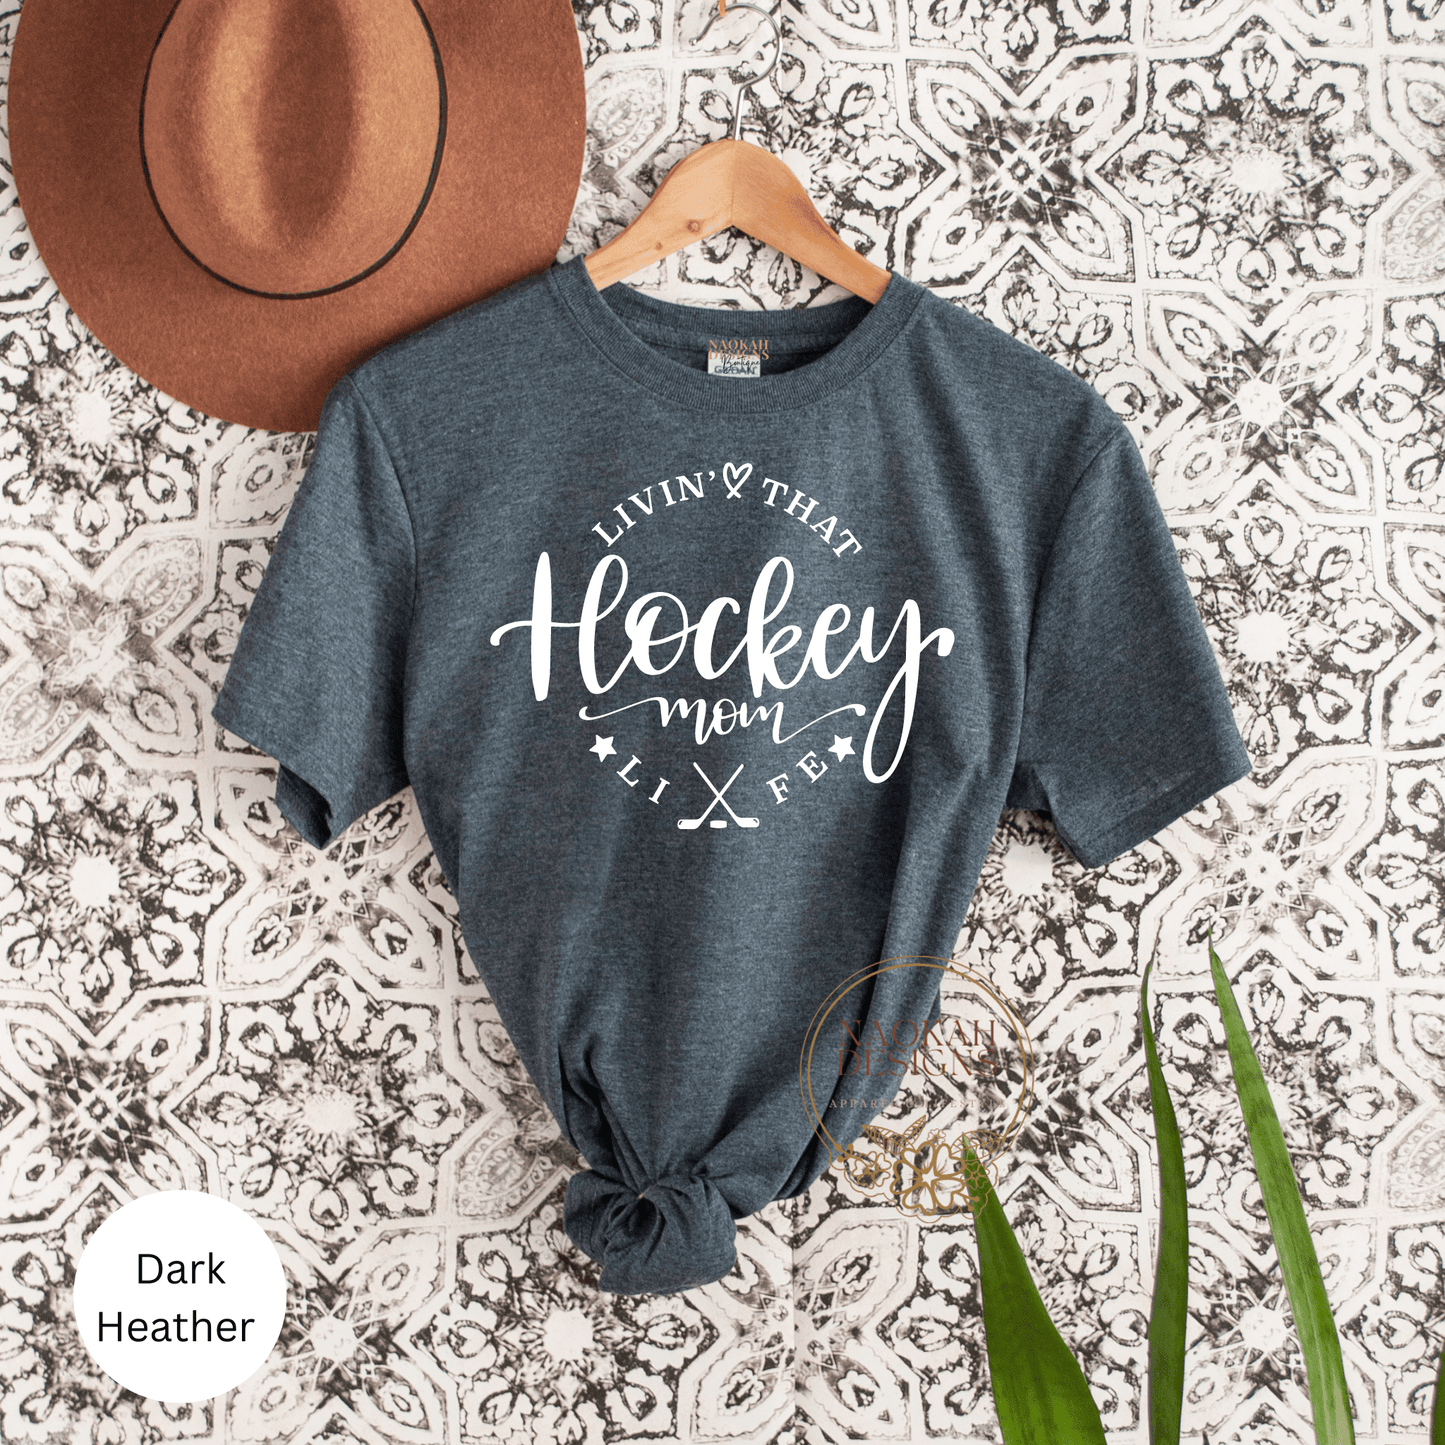 Livin That Hockey Mom Life Shirt, Hockey Life Shirt, Hockey Mom Gear, Hockey Gifts for Mom, Hockey Support Shirt, Hockey Gift, Unisex Shirt